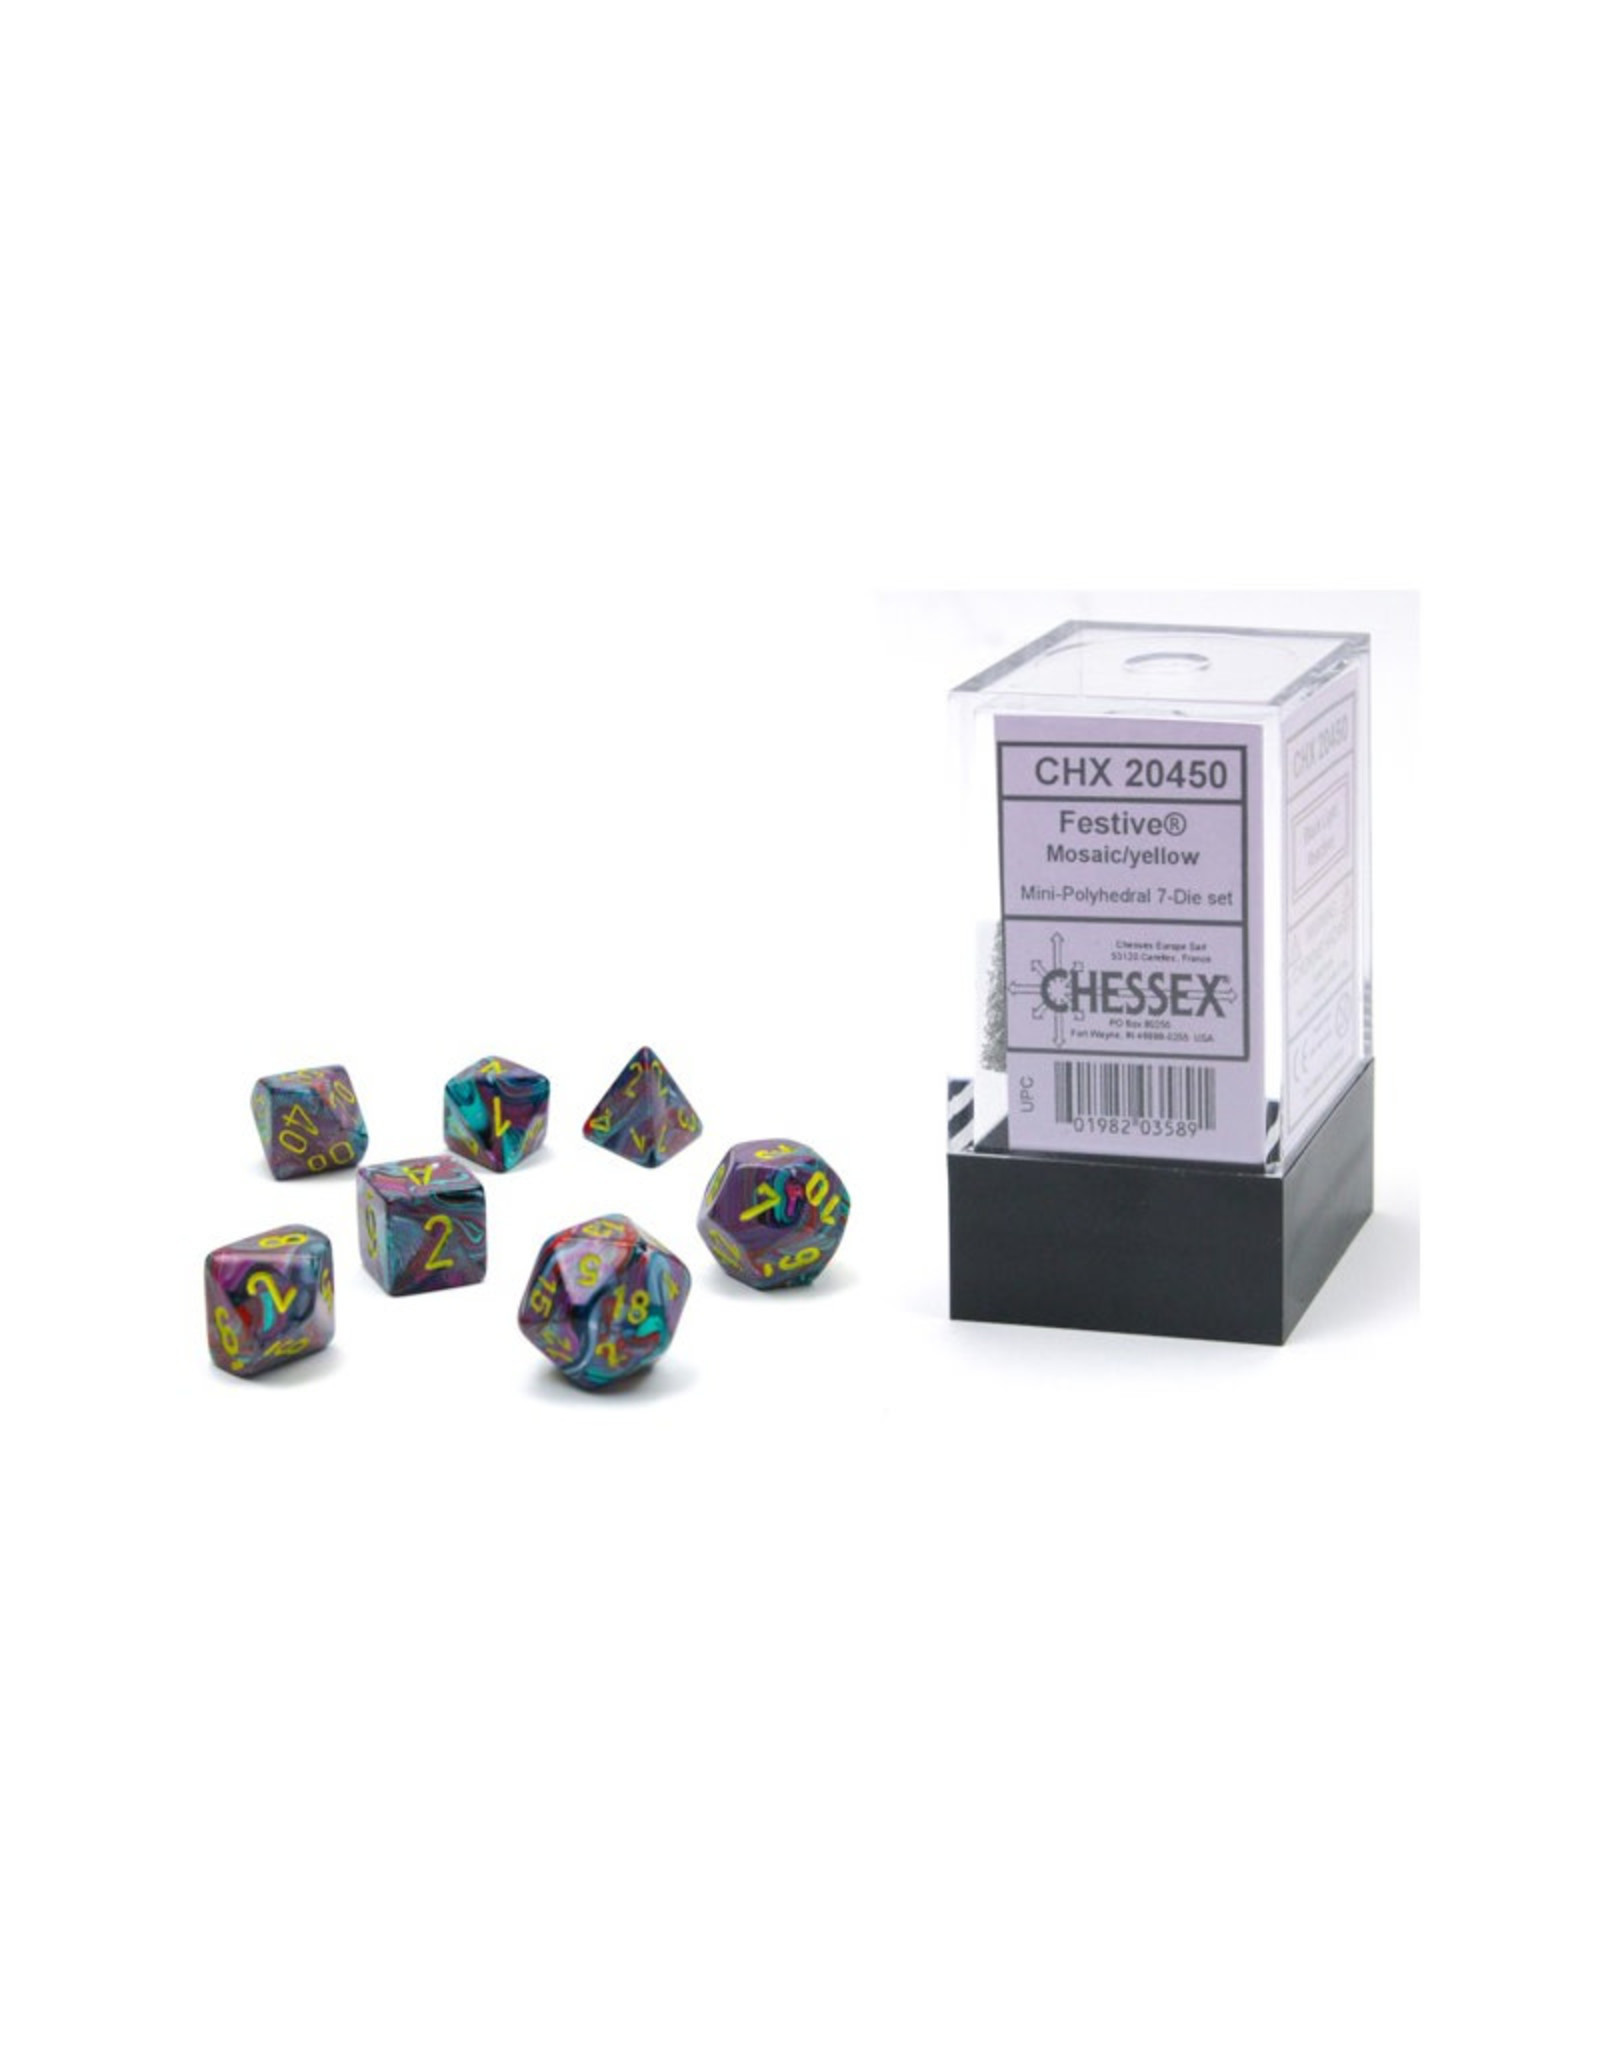 Chessex Mini Polyhedral Dice Set (7) Festive Mosiac